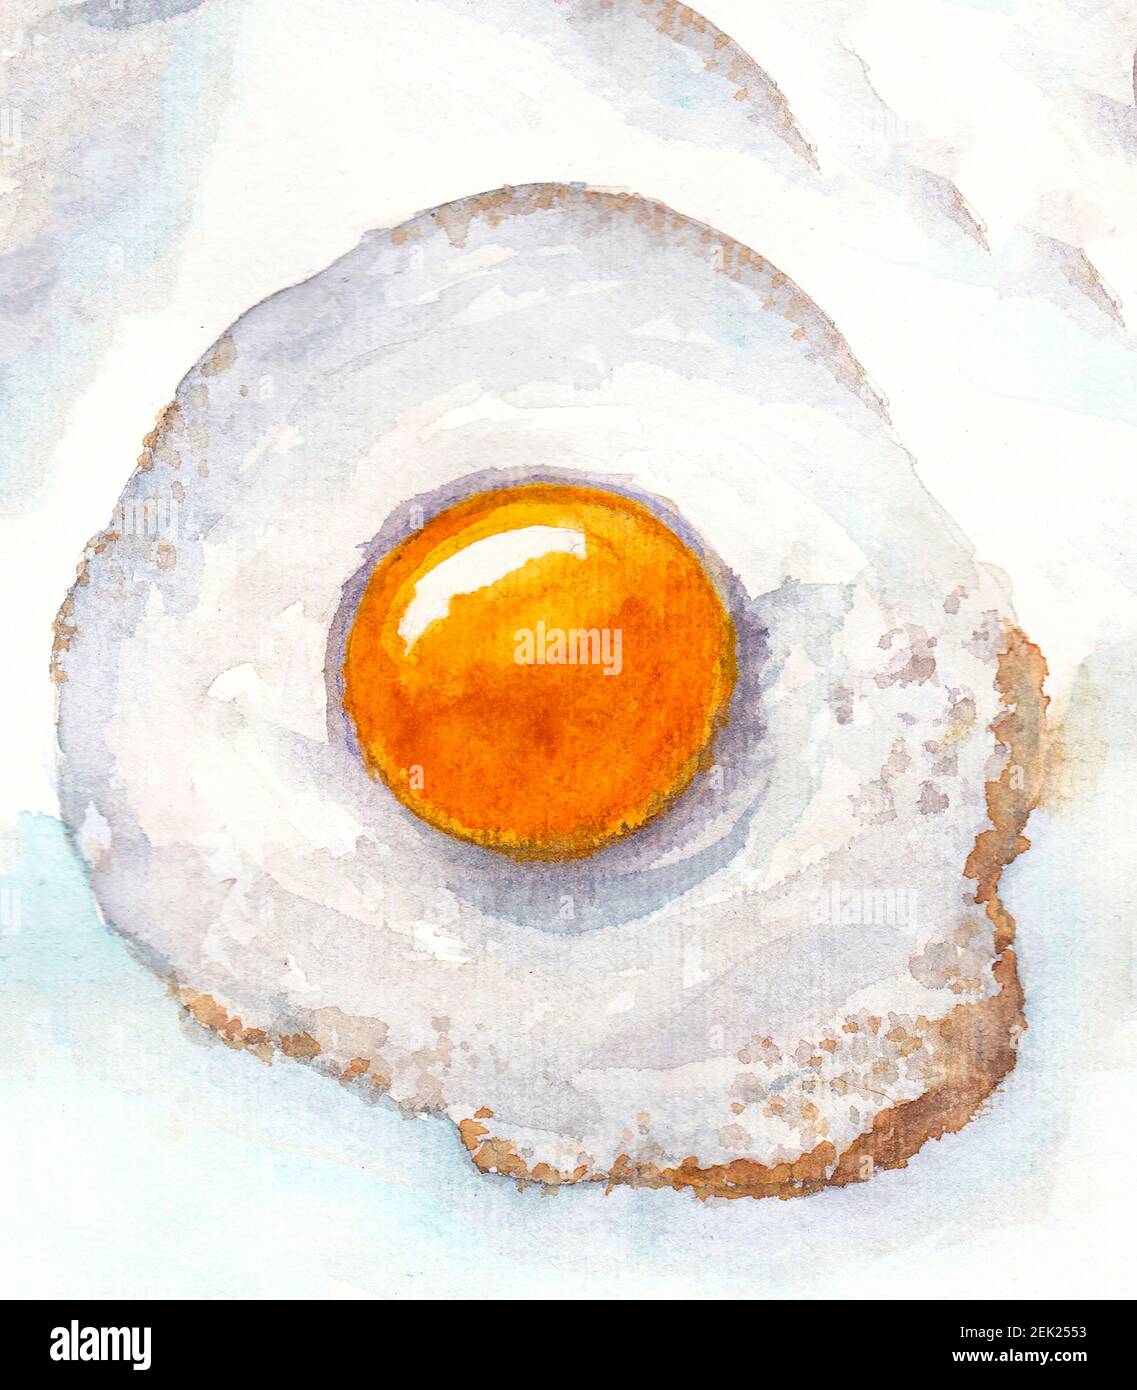 Scrambled egg on pan watercolor 22418334 PNG